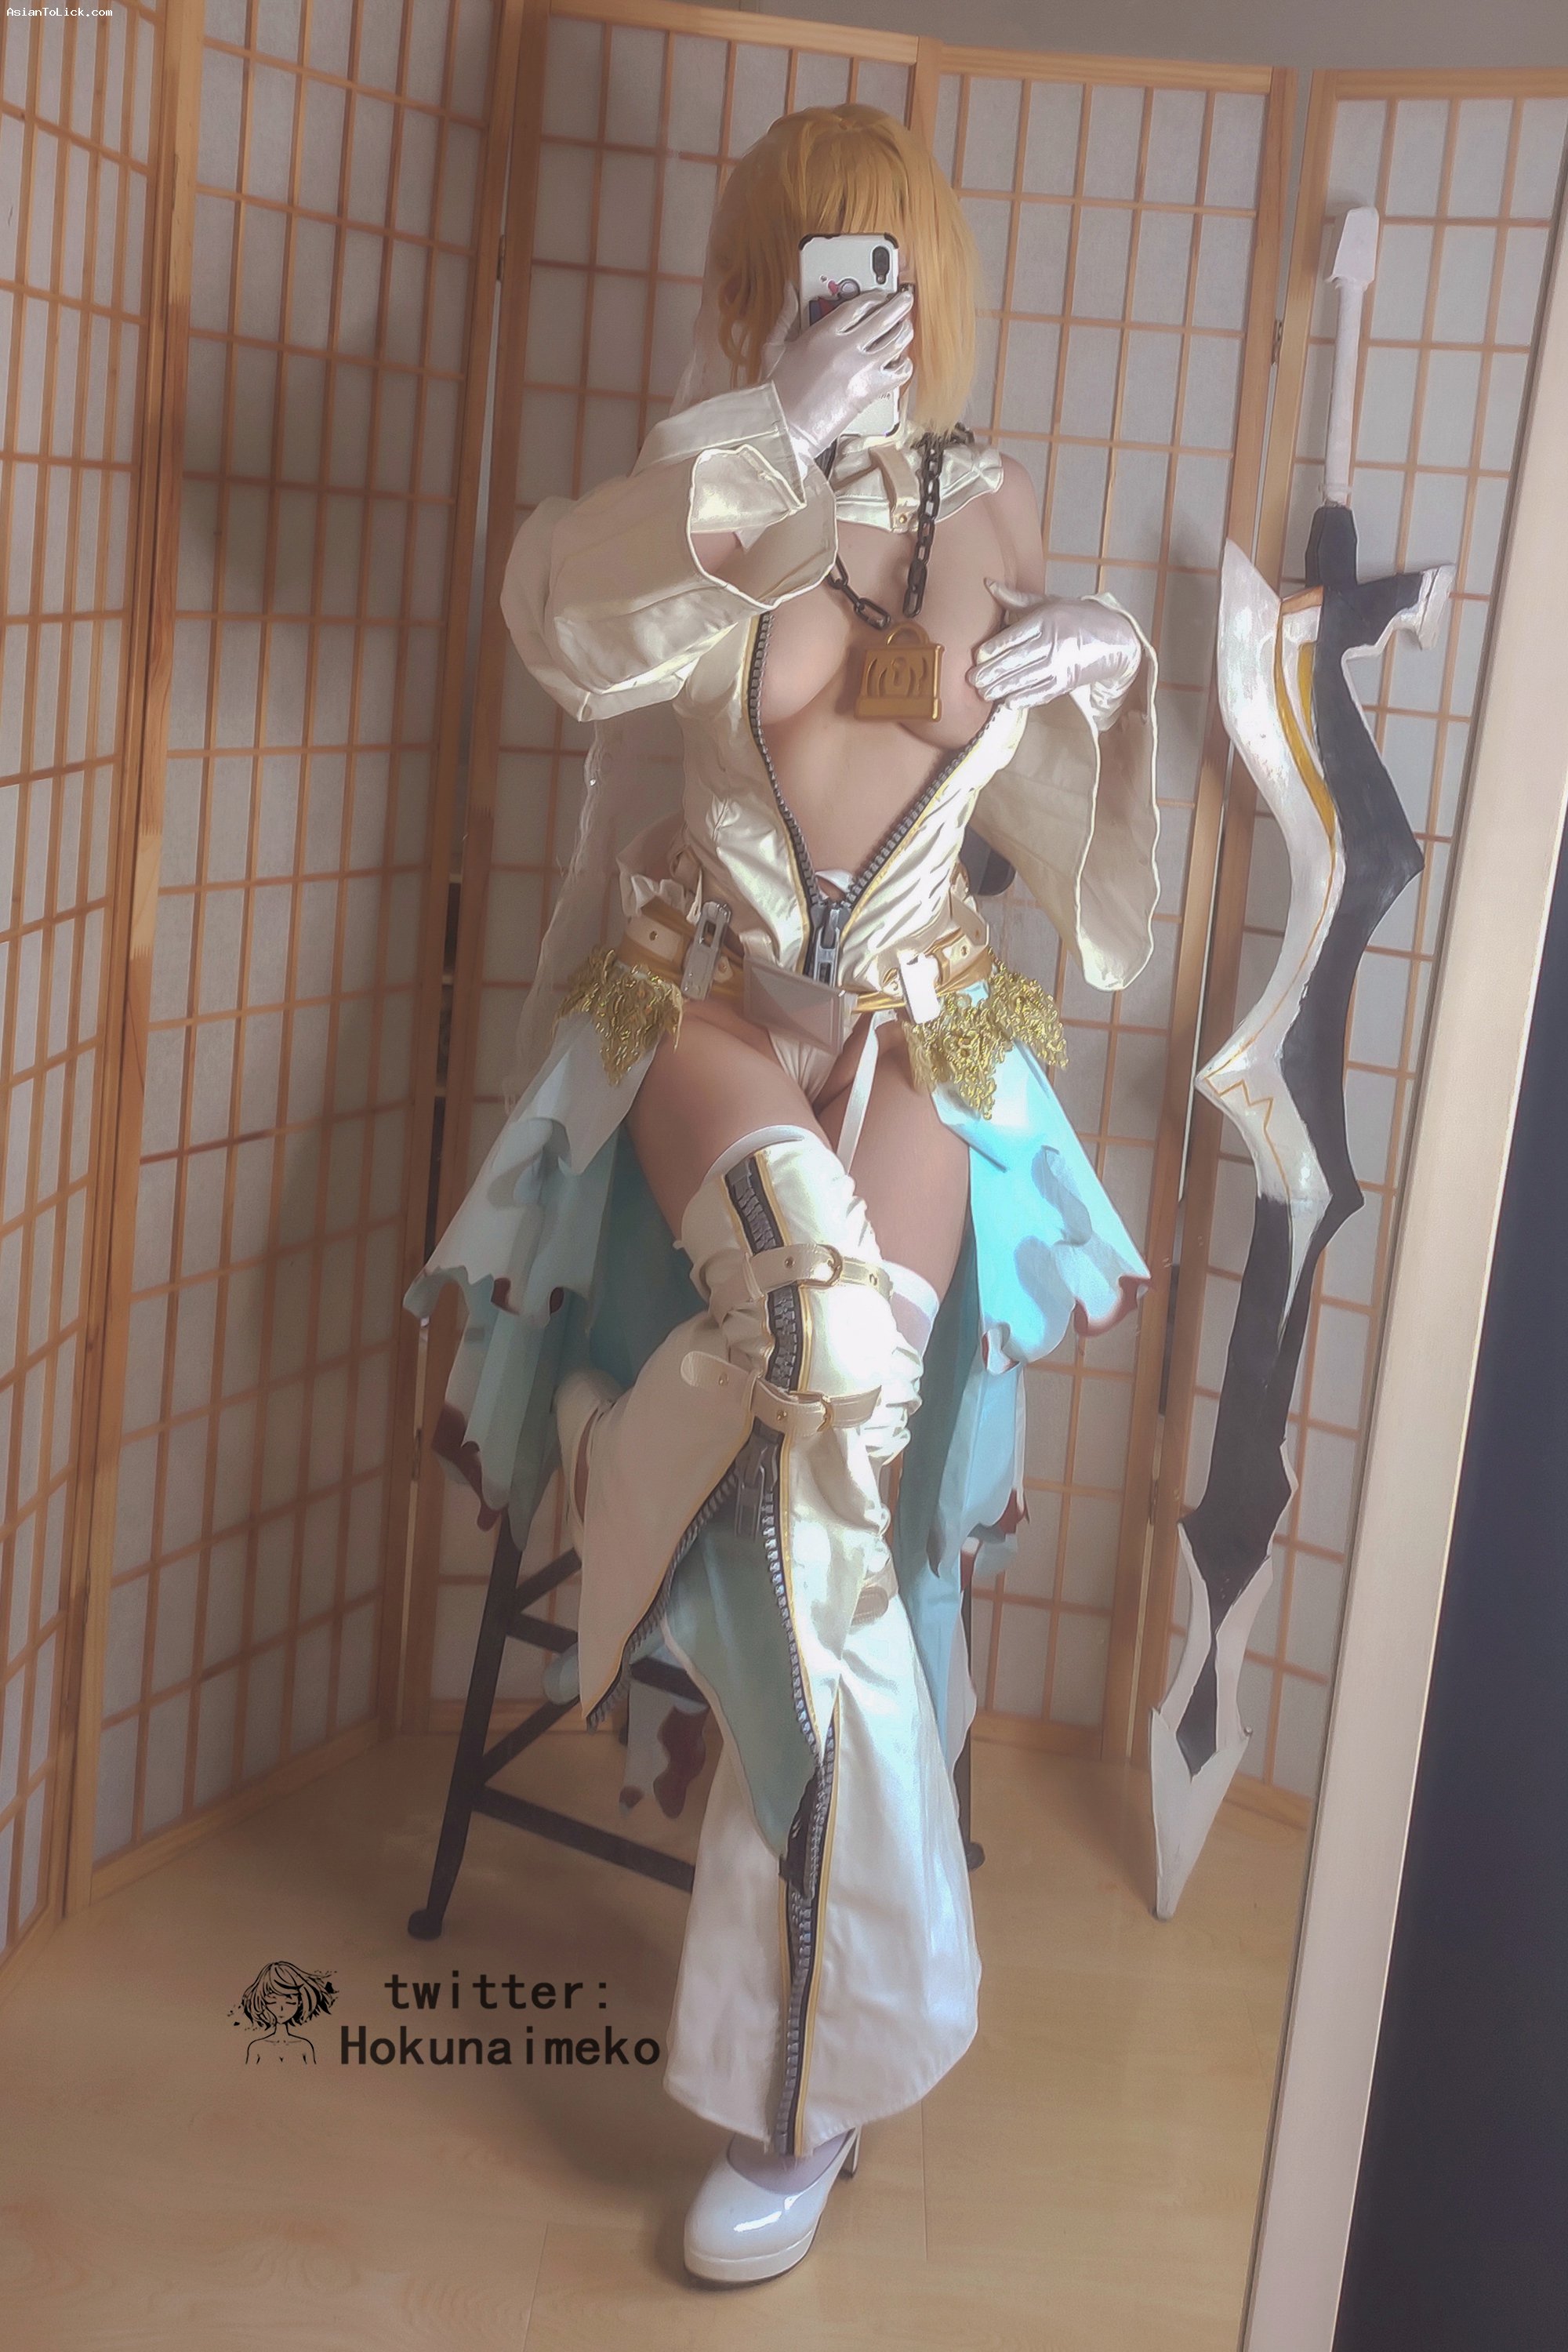 Fate/Grand Order Cosplay - Hokunaimeko Nero Bride Selfie Collection 25 